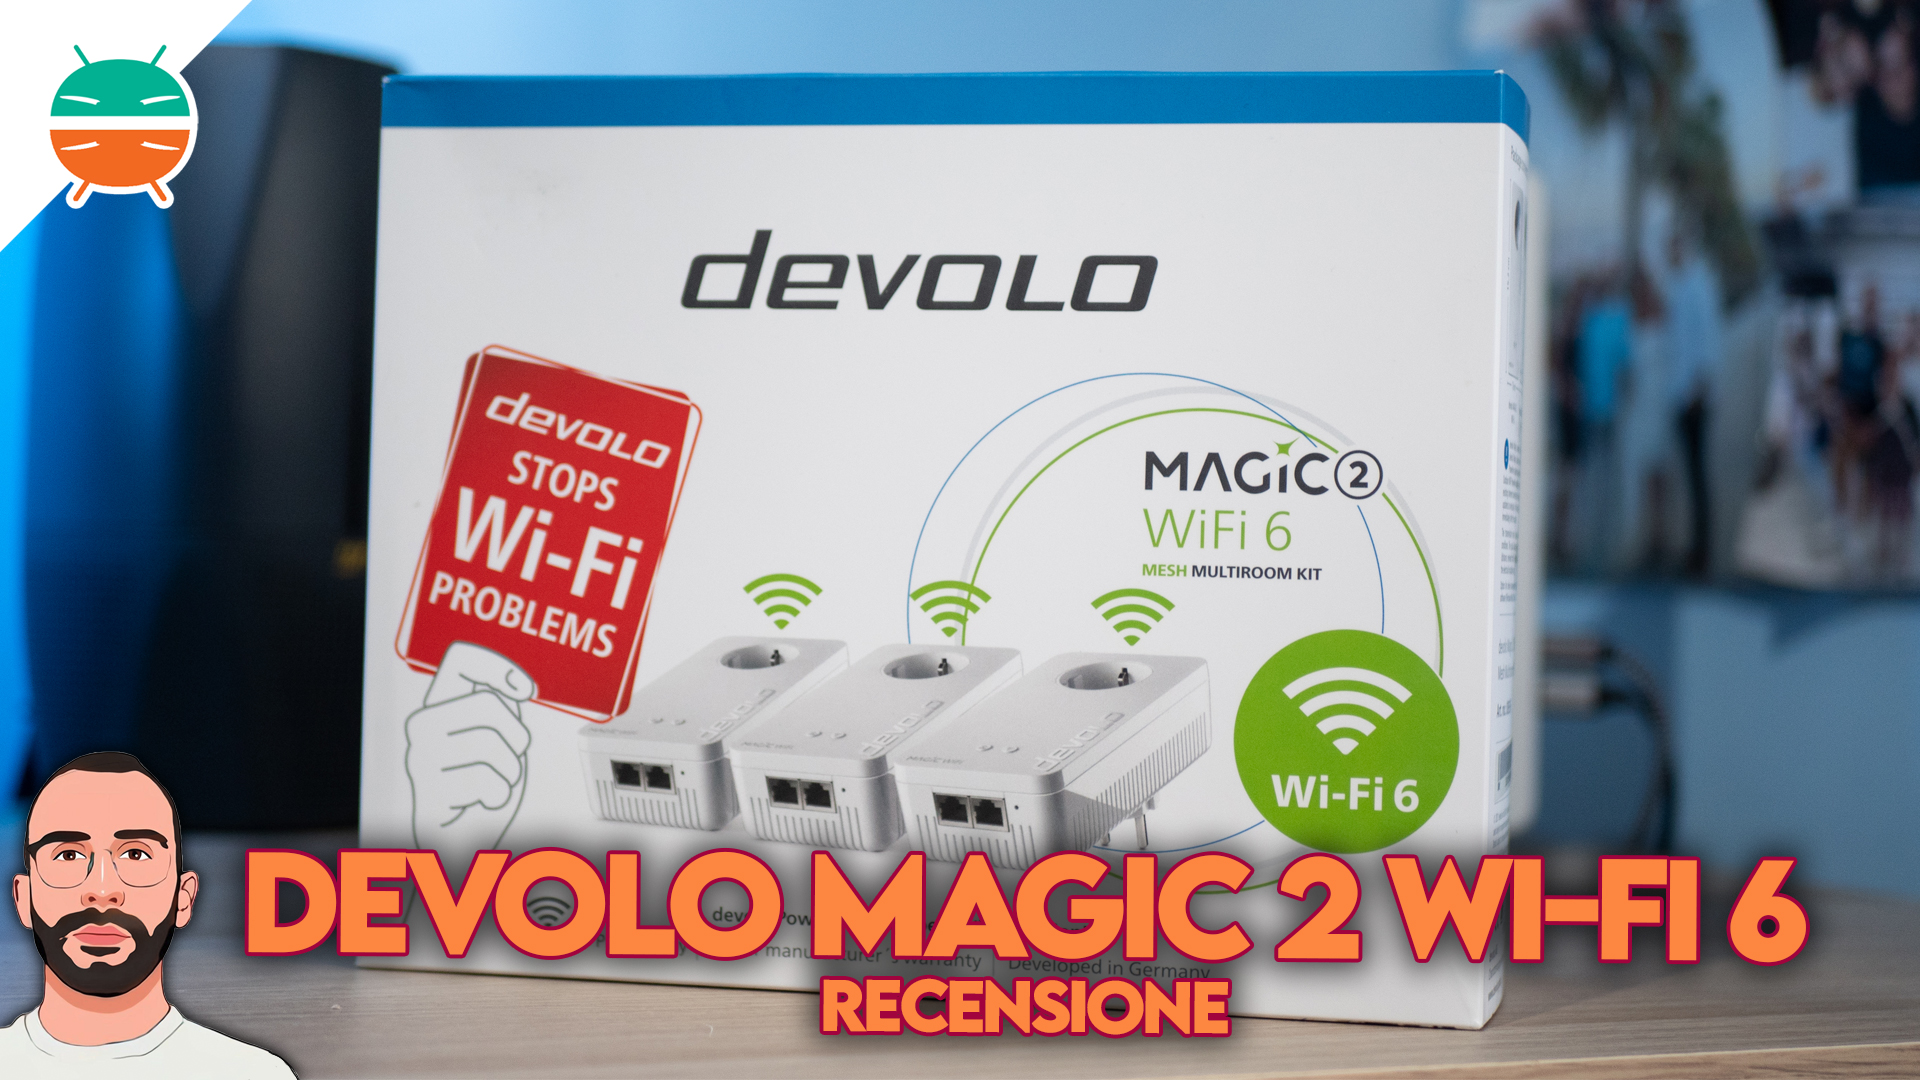  Devolo Magic 2 WiFi 6 : Everything Else